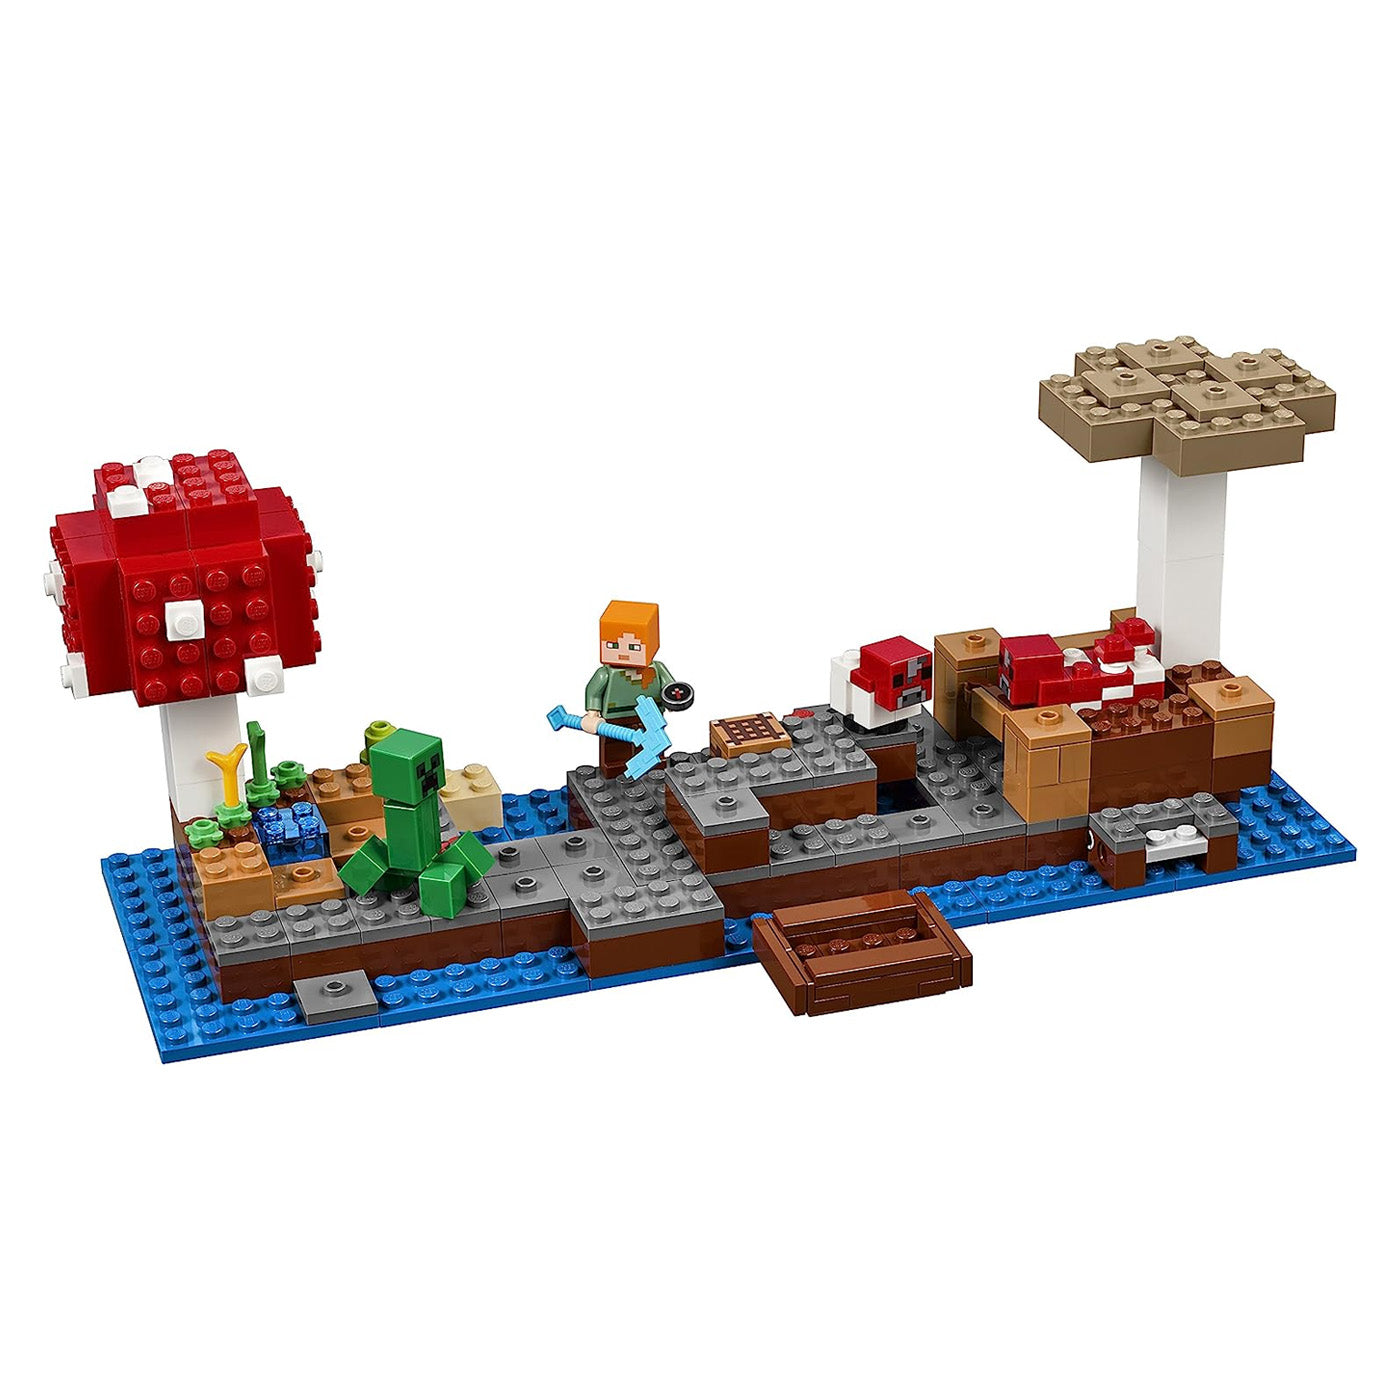 LEGO Minecraft: The Mushroom Island Set 21129